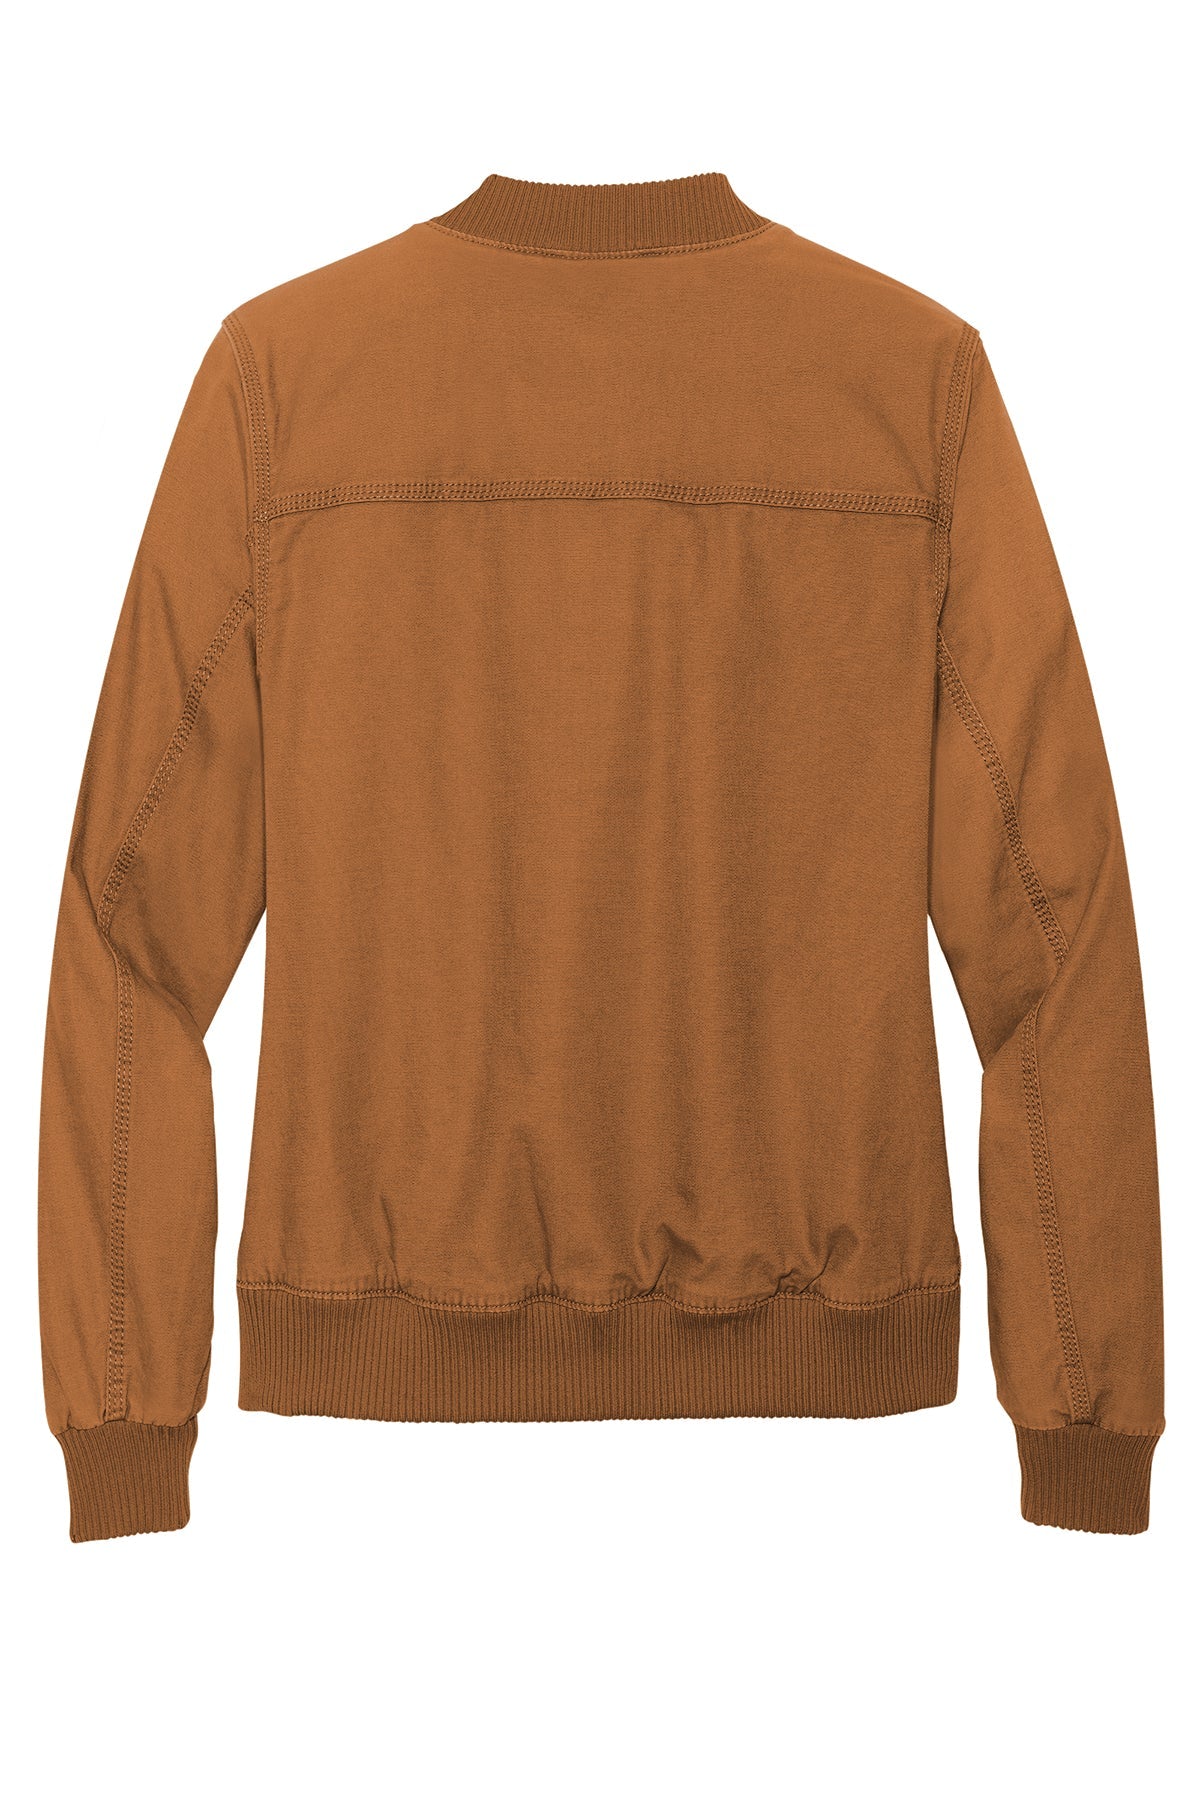 Carhartt Women's Rugged Flex Crawford Jacket CT102524 - BT Imprintables Shirts